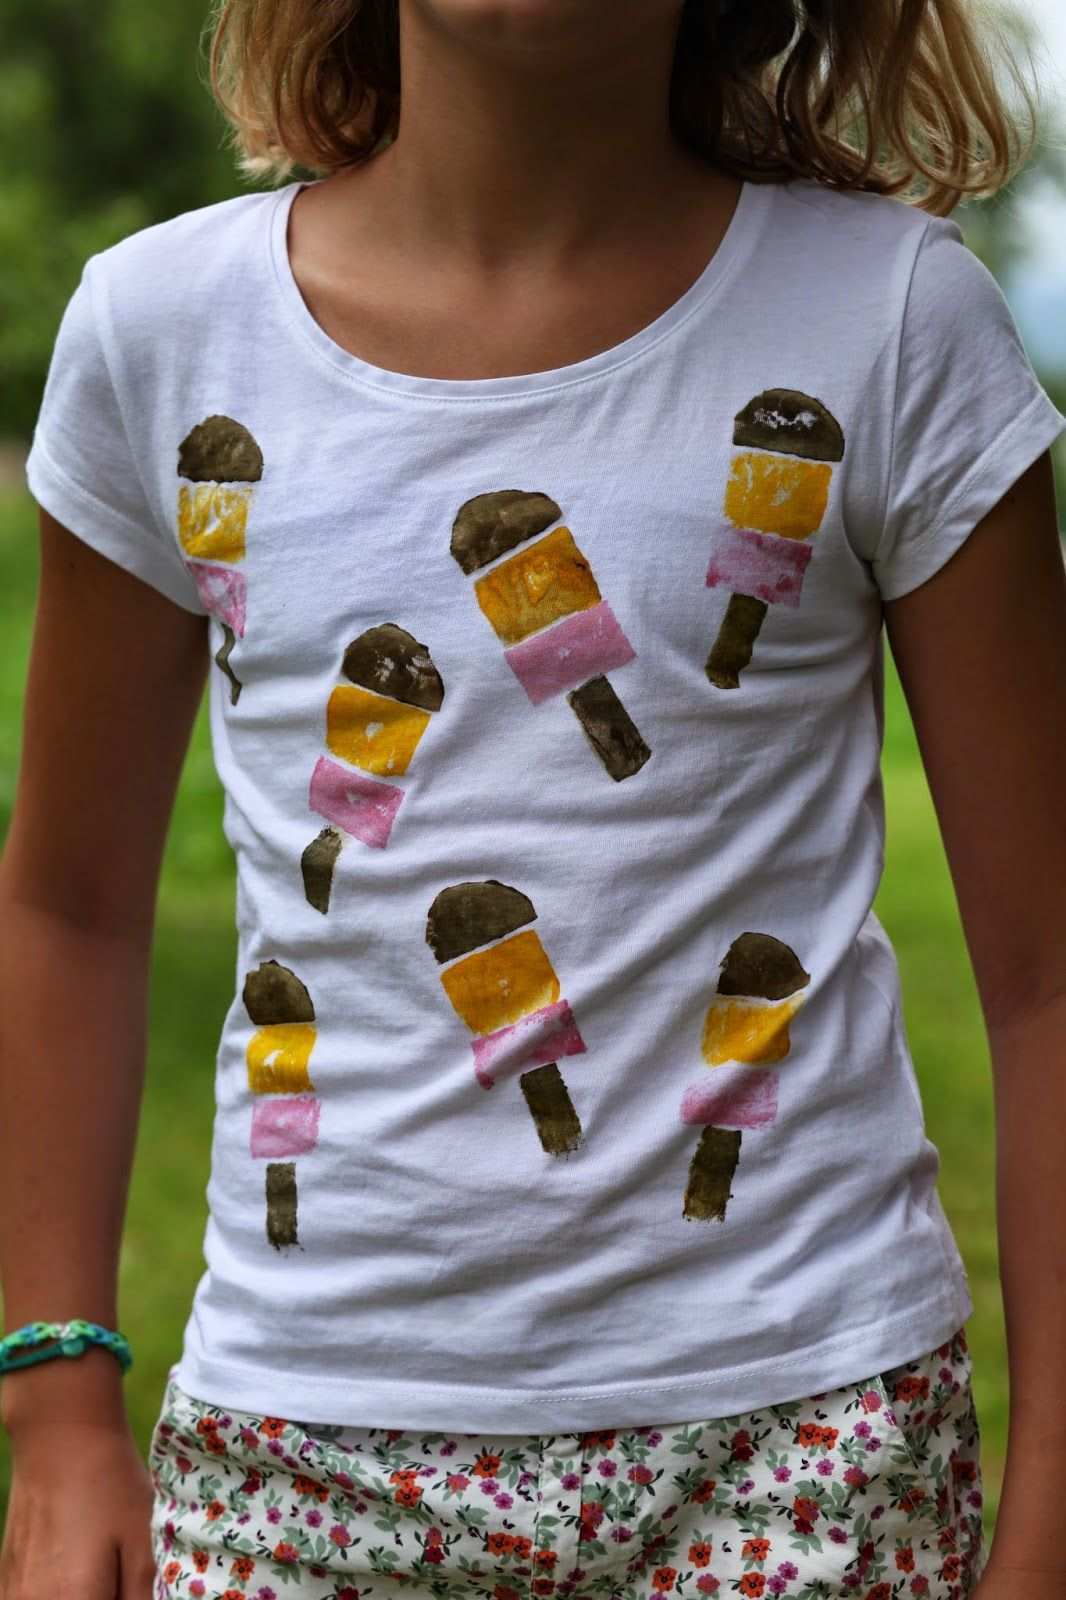 Wohn Projekt Kind Of Art Diy Kartoffeldruck T Shirts Kartoffeldruck Shirt Selbst Bedrucken Stempeln Kinder